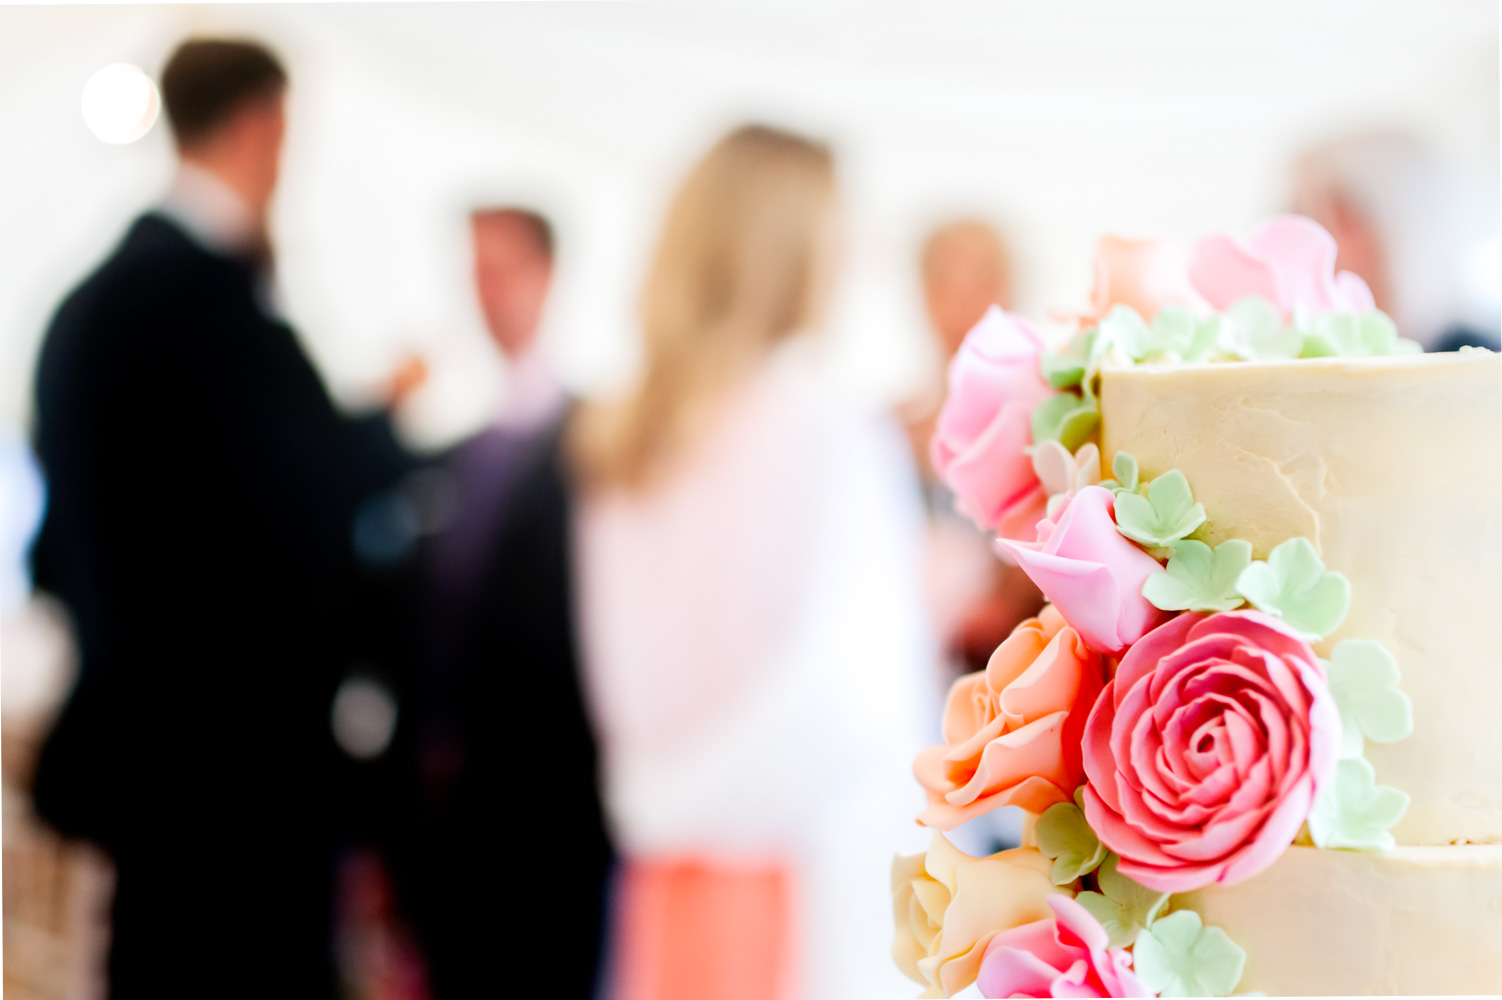 Close up of wedding cake